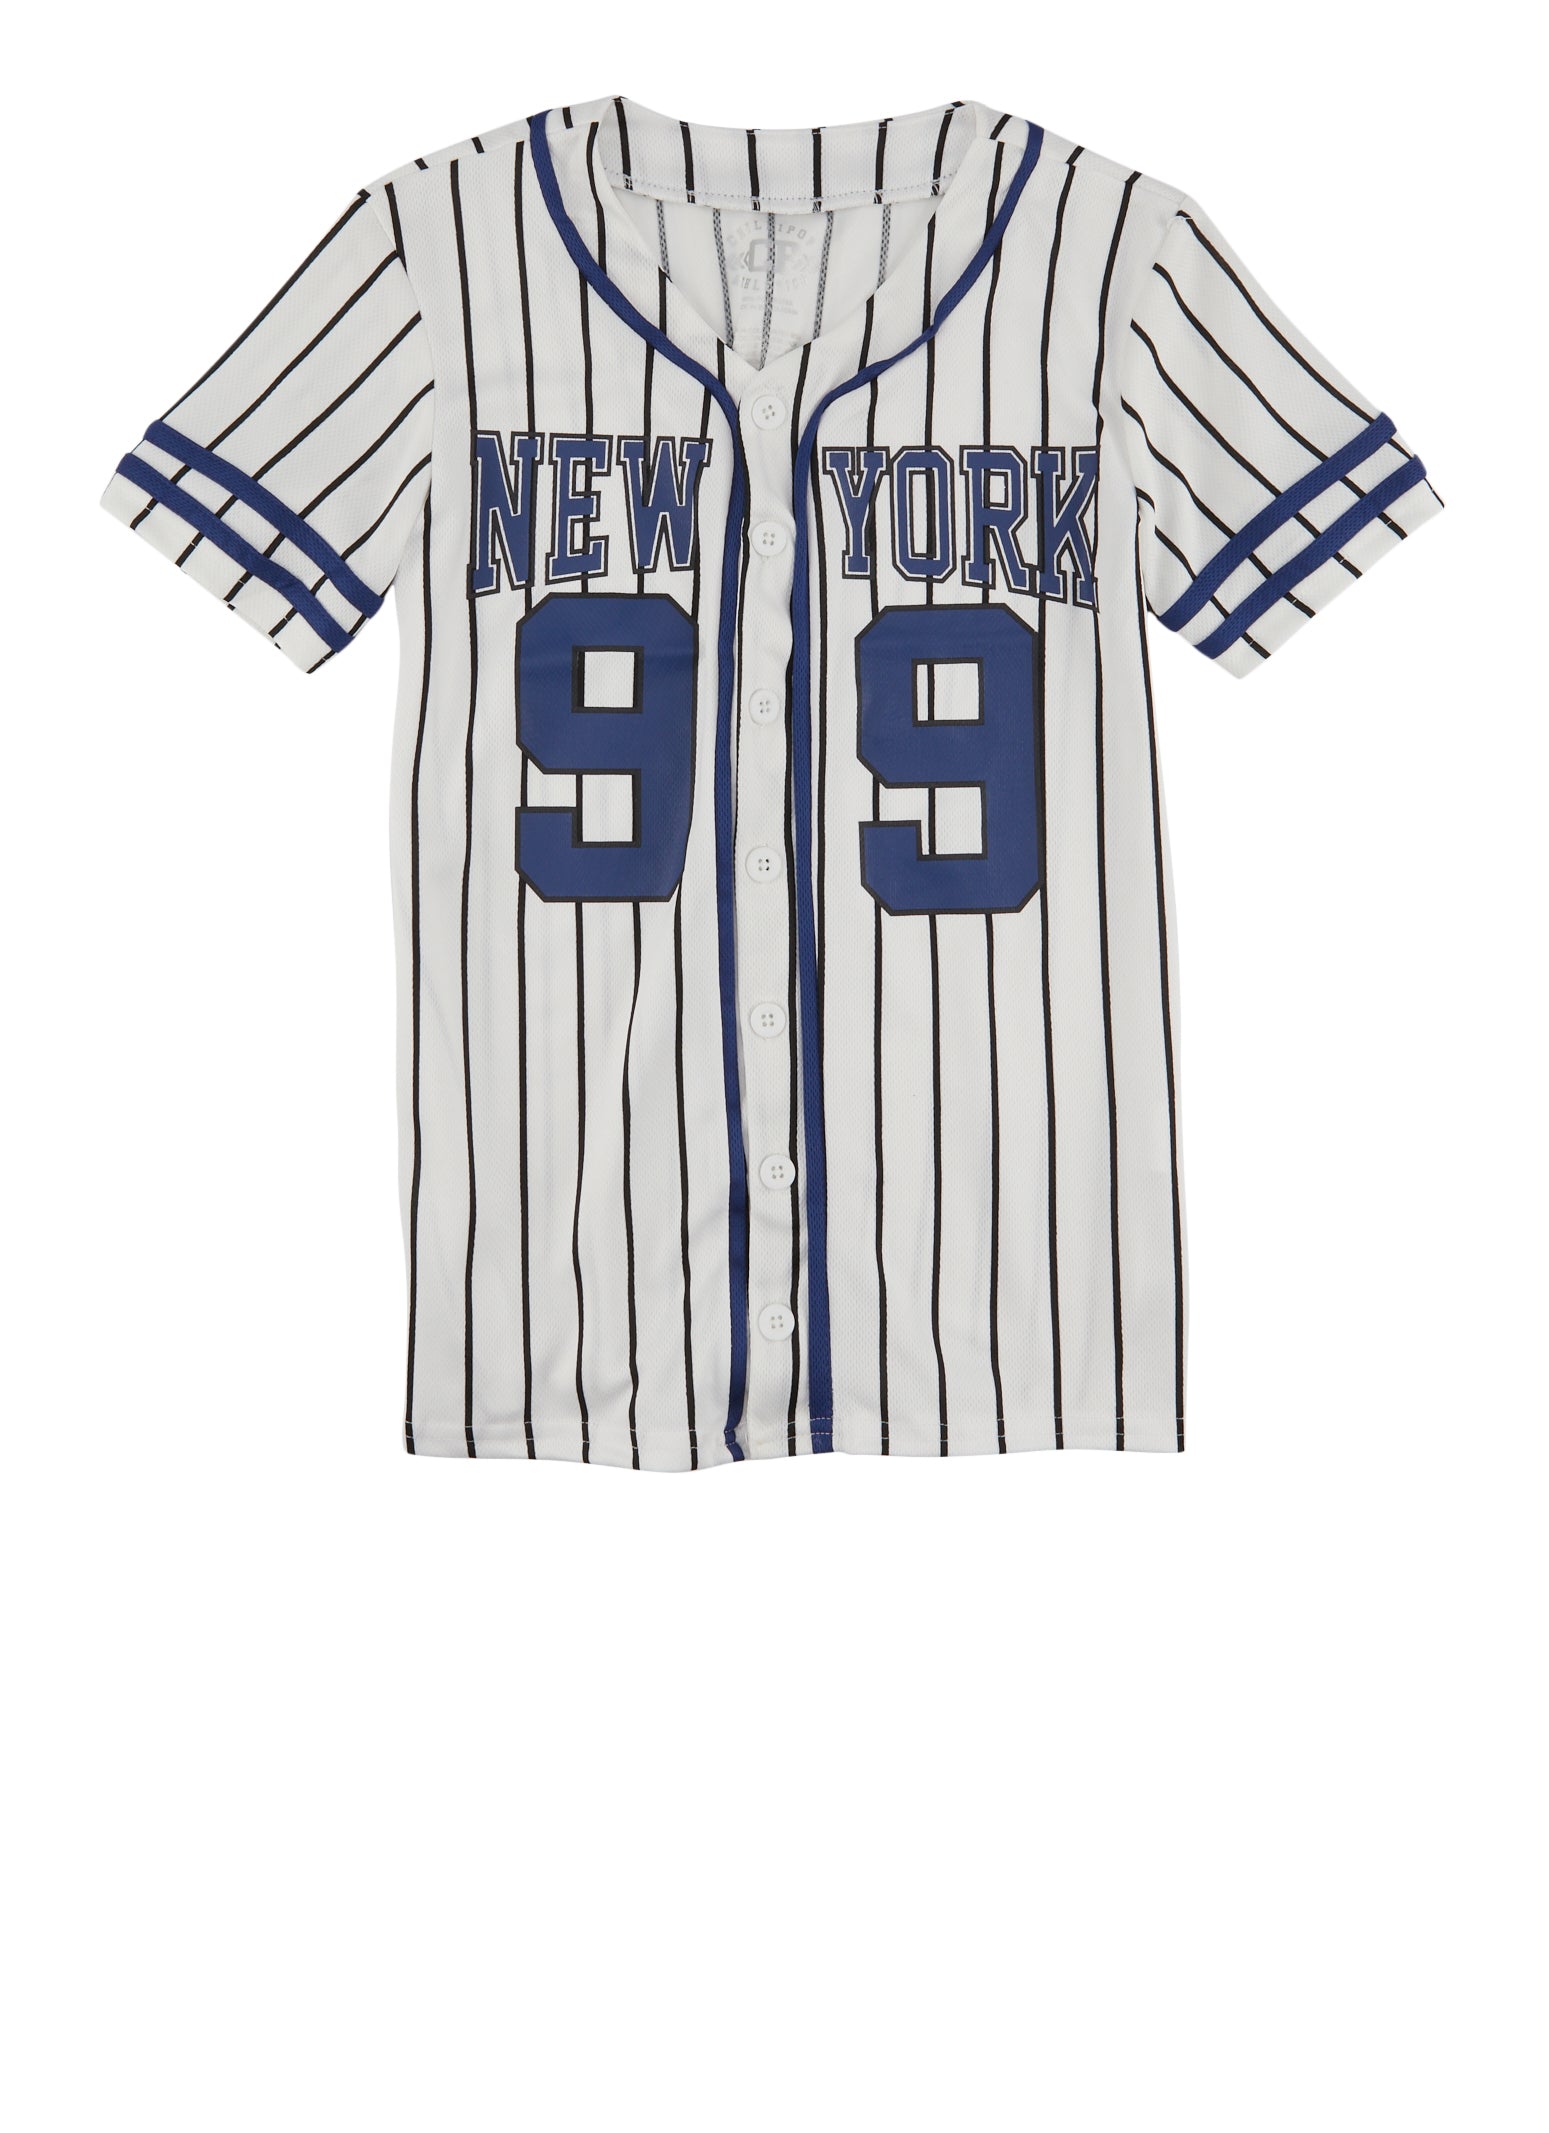 Boys Varsity Striped New York Graphic Baseball Jersey, White,